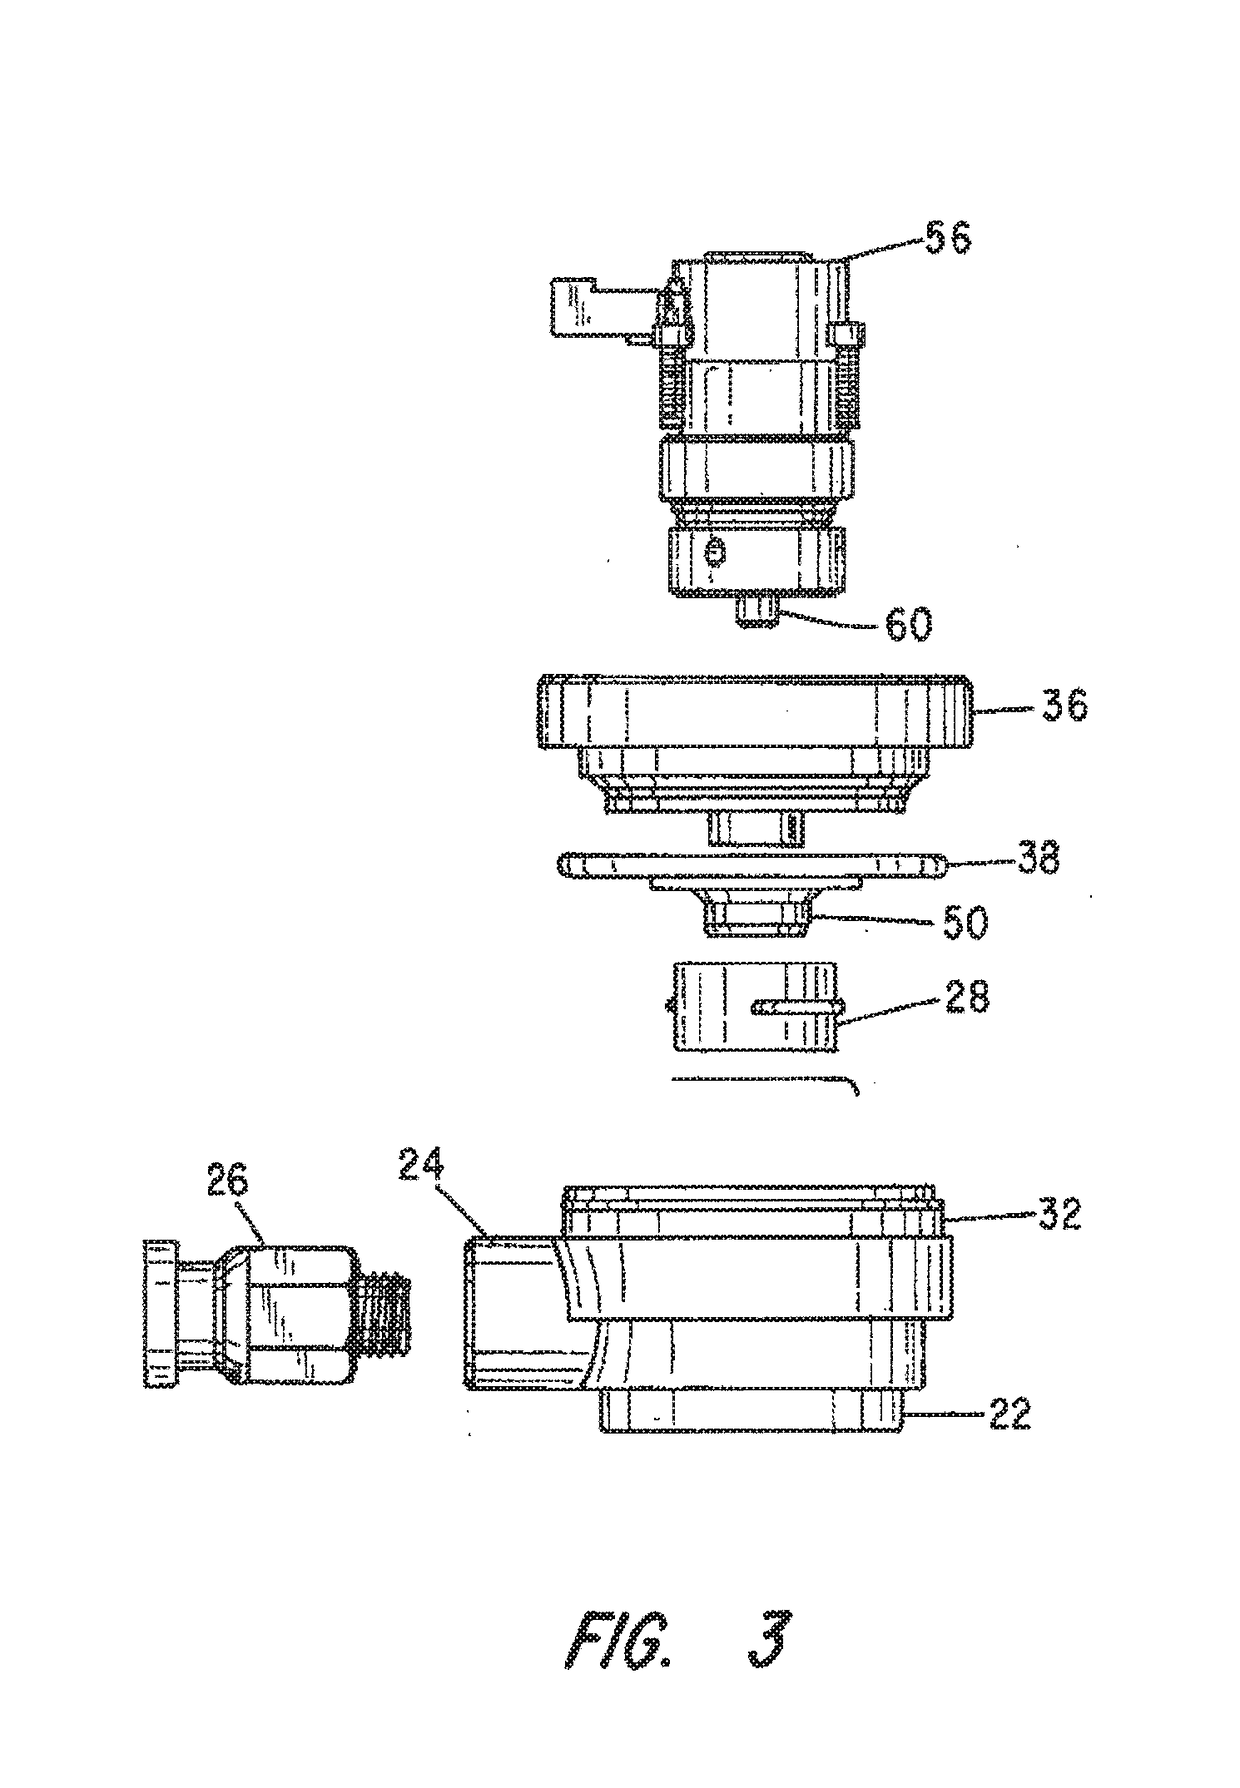 Solenoid controlled respiratory gas demand valve